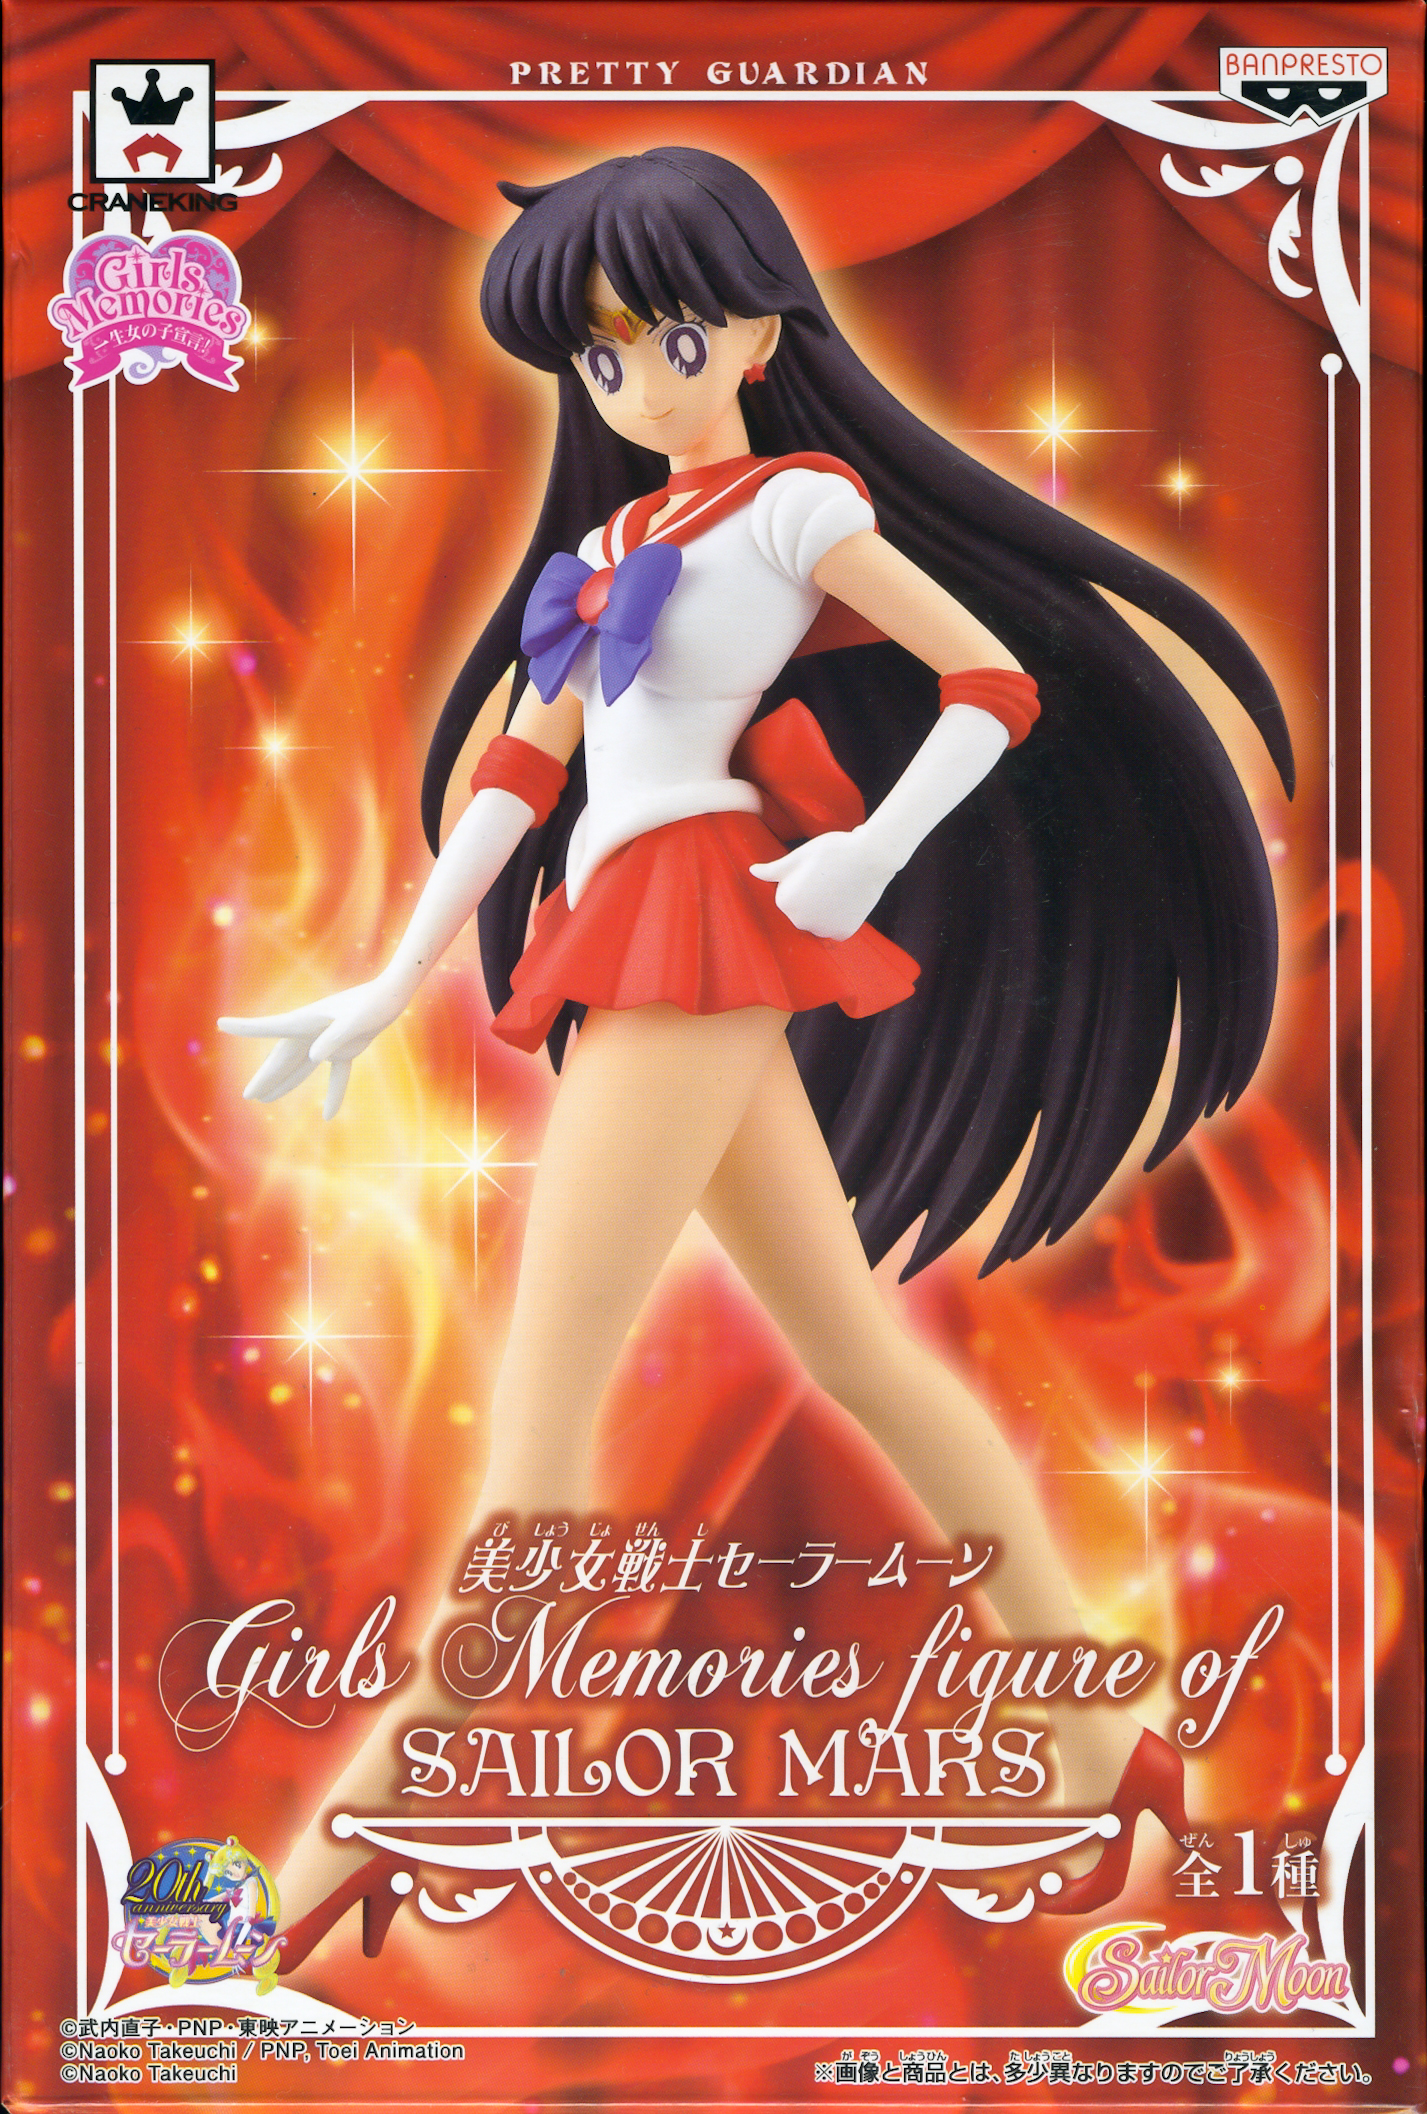 Sailor Mars Figure, Sailor Moon, Girls Memories, Banpresto